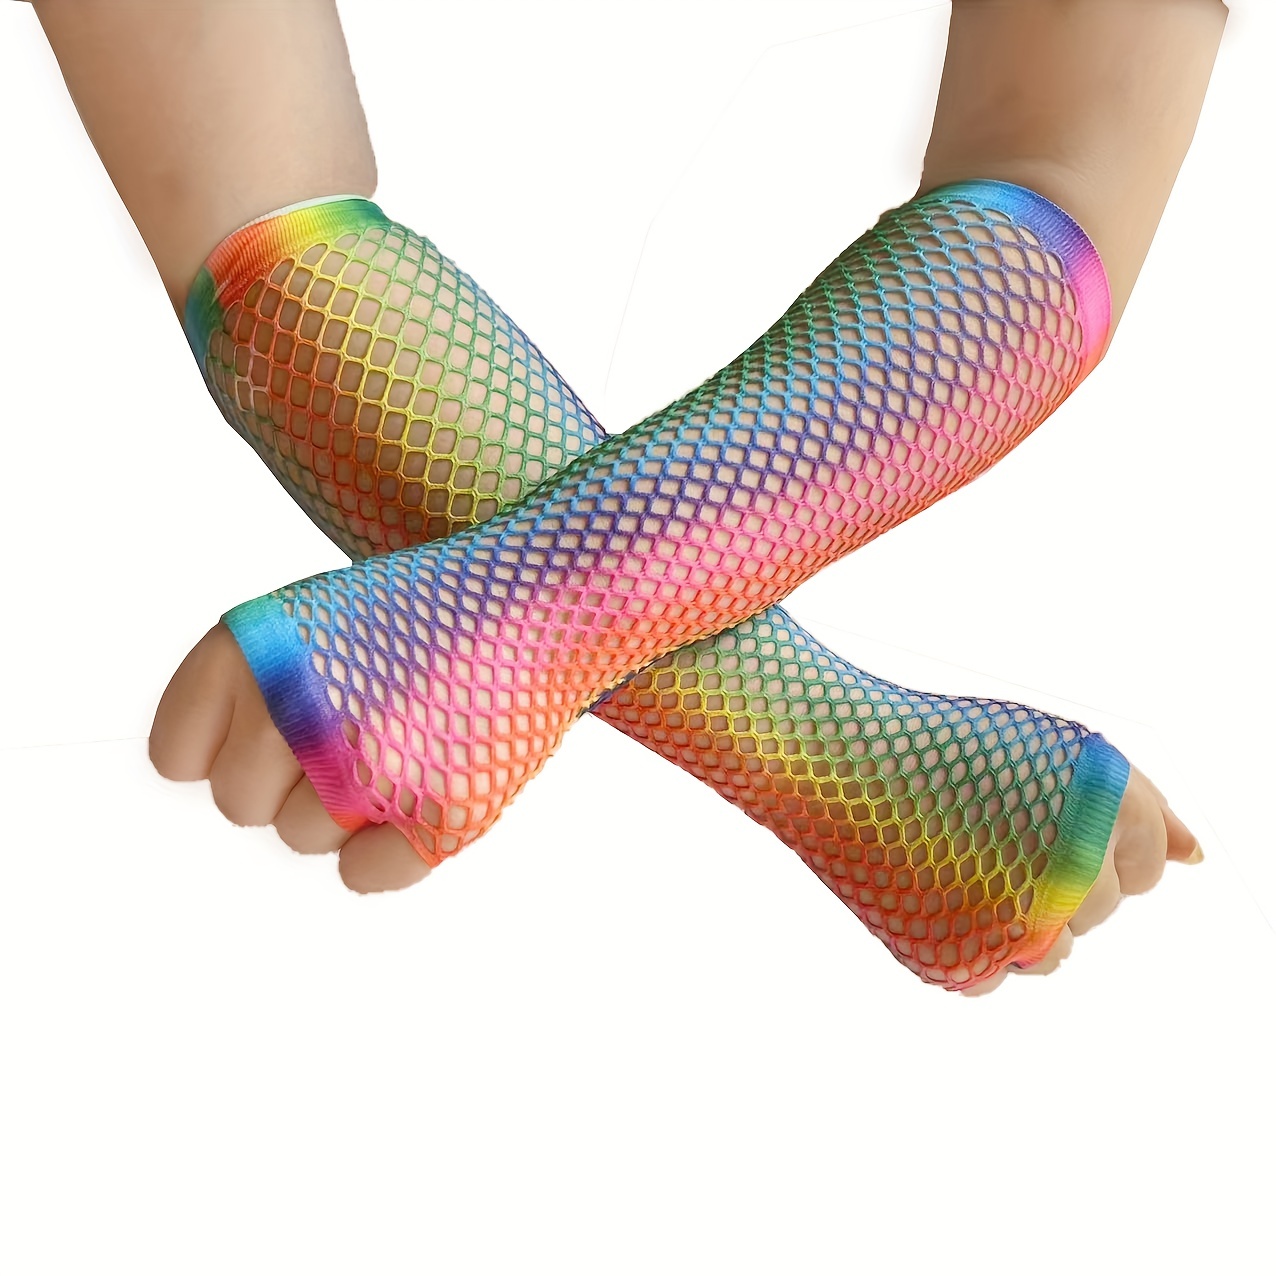 1 pair Rainbow Gradient Half Finger Gloves - Trendy Fingerless Fishing Net  Gloves for LGBT Pride Parties and More